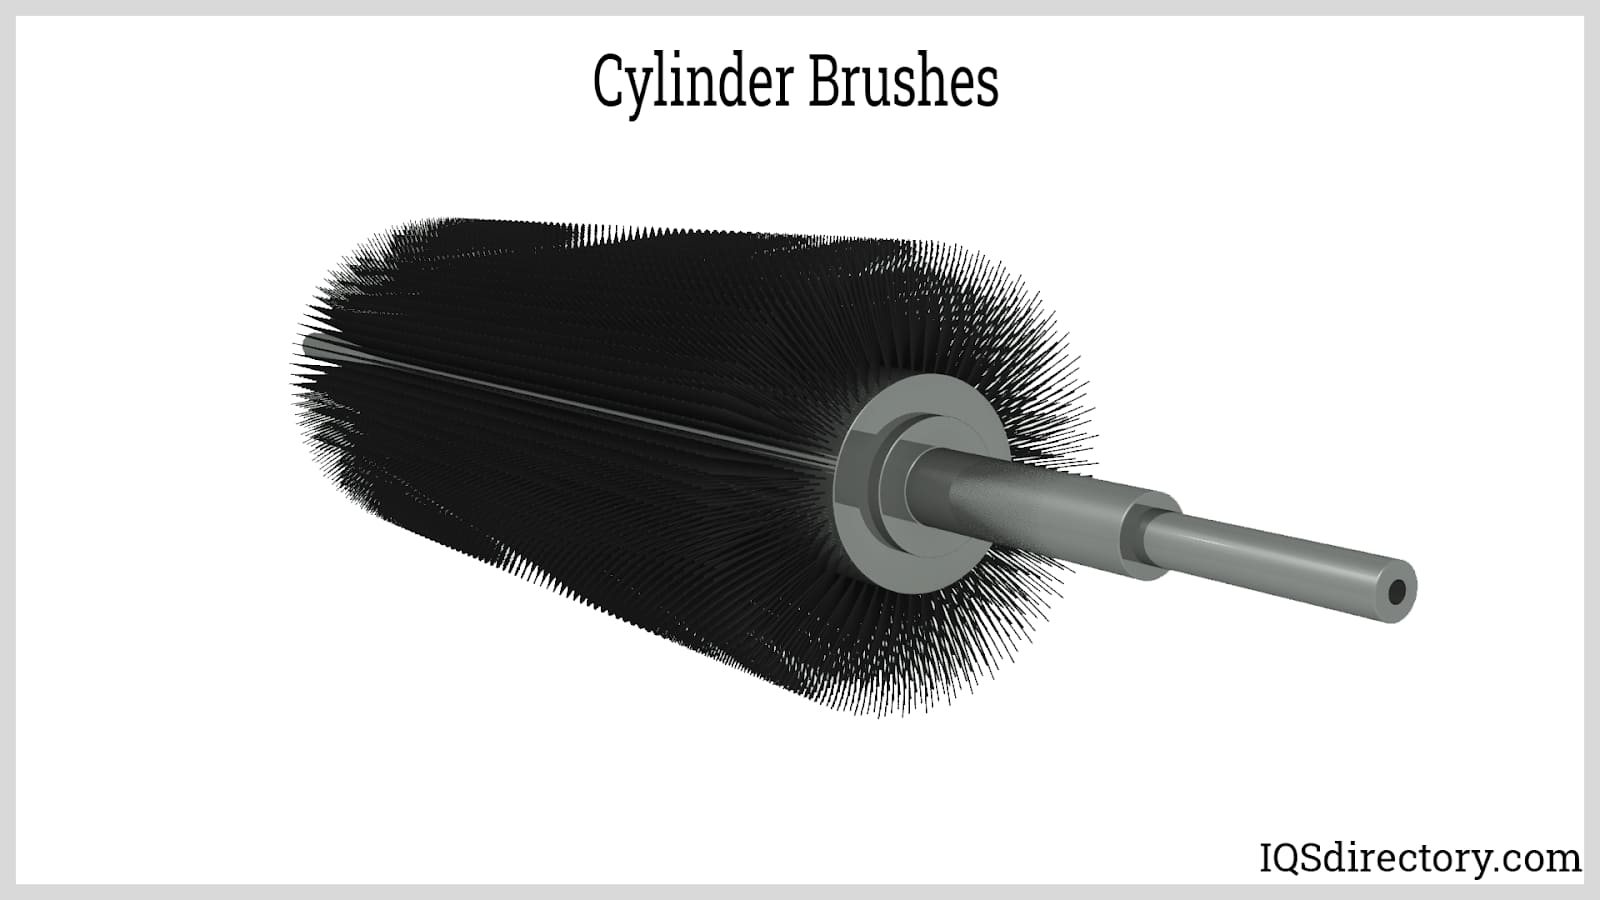 https://www.iqsdirectory.com/articles/brush/cylinder-brushes/cylinder-brushes.jpg